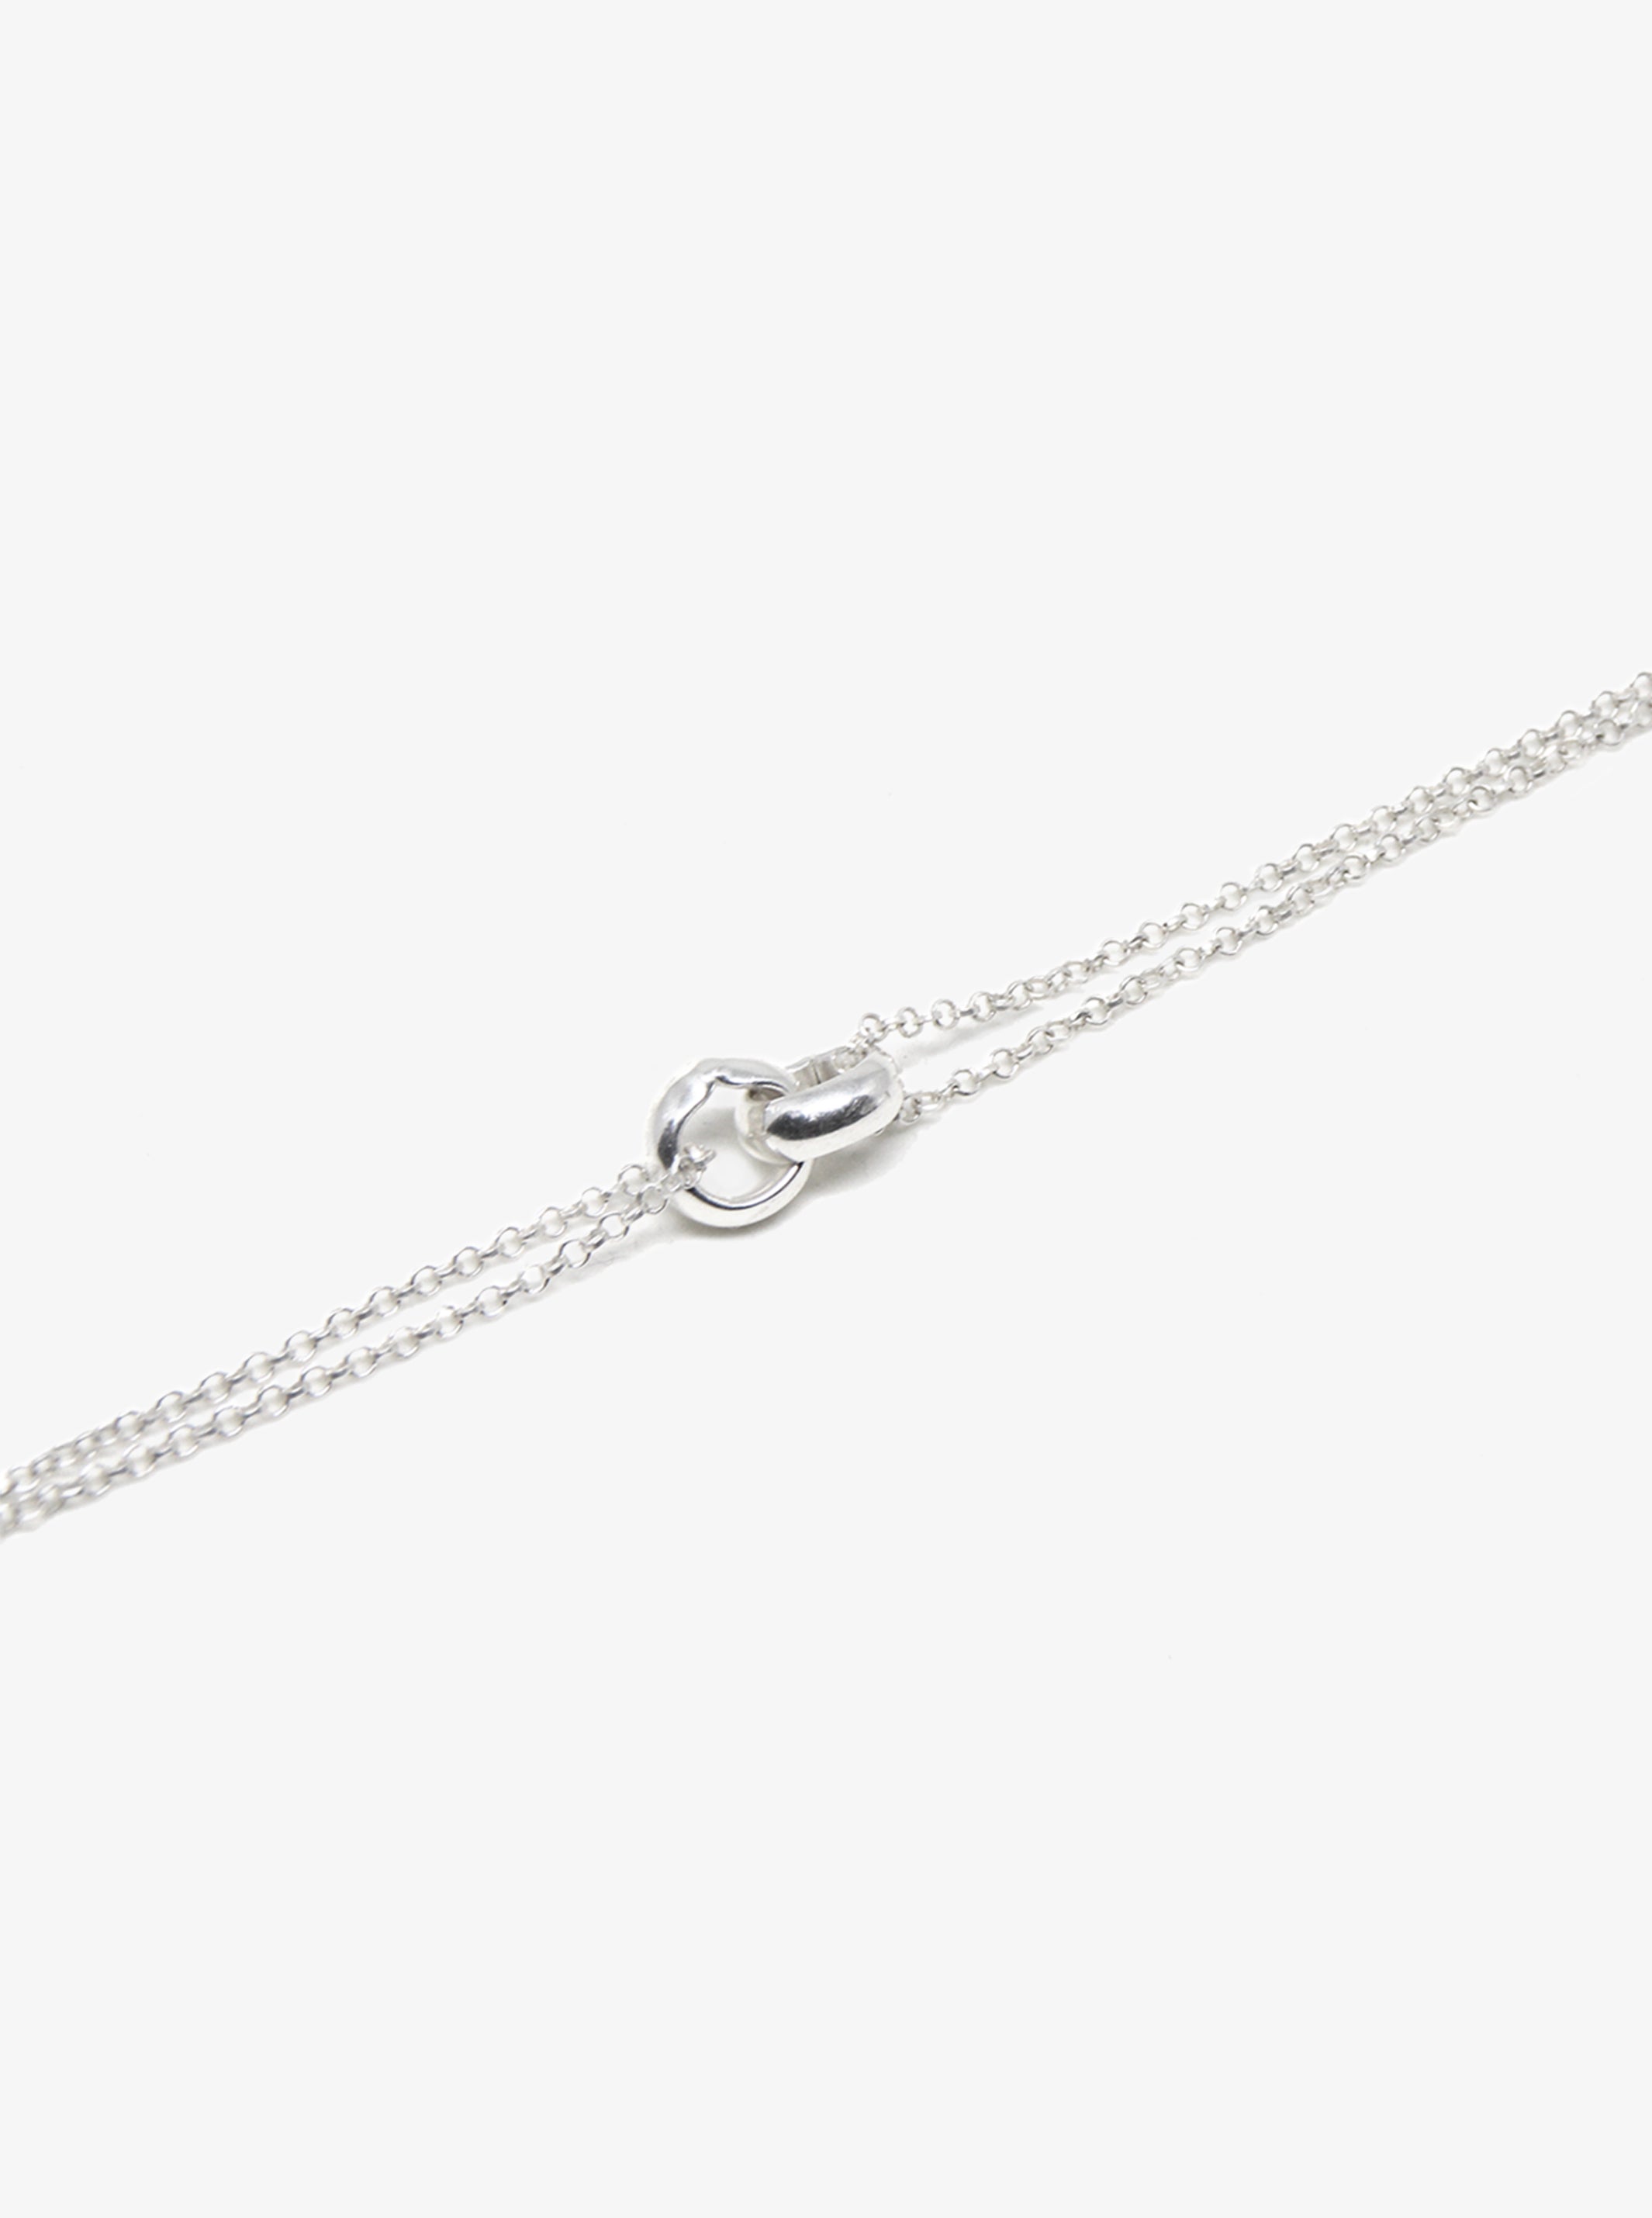 llayers-mens-women-jewelry-silver-chain-bracelet-infinity-newyork-brooklyn-F2